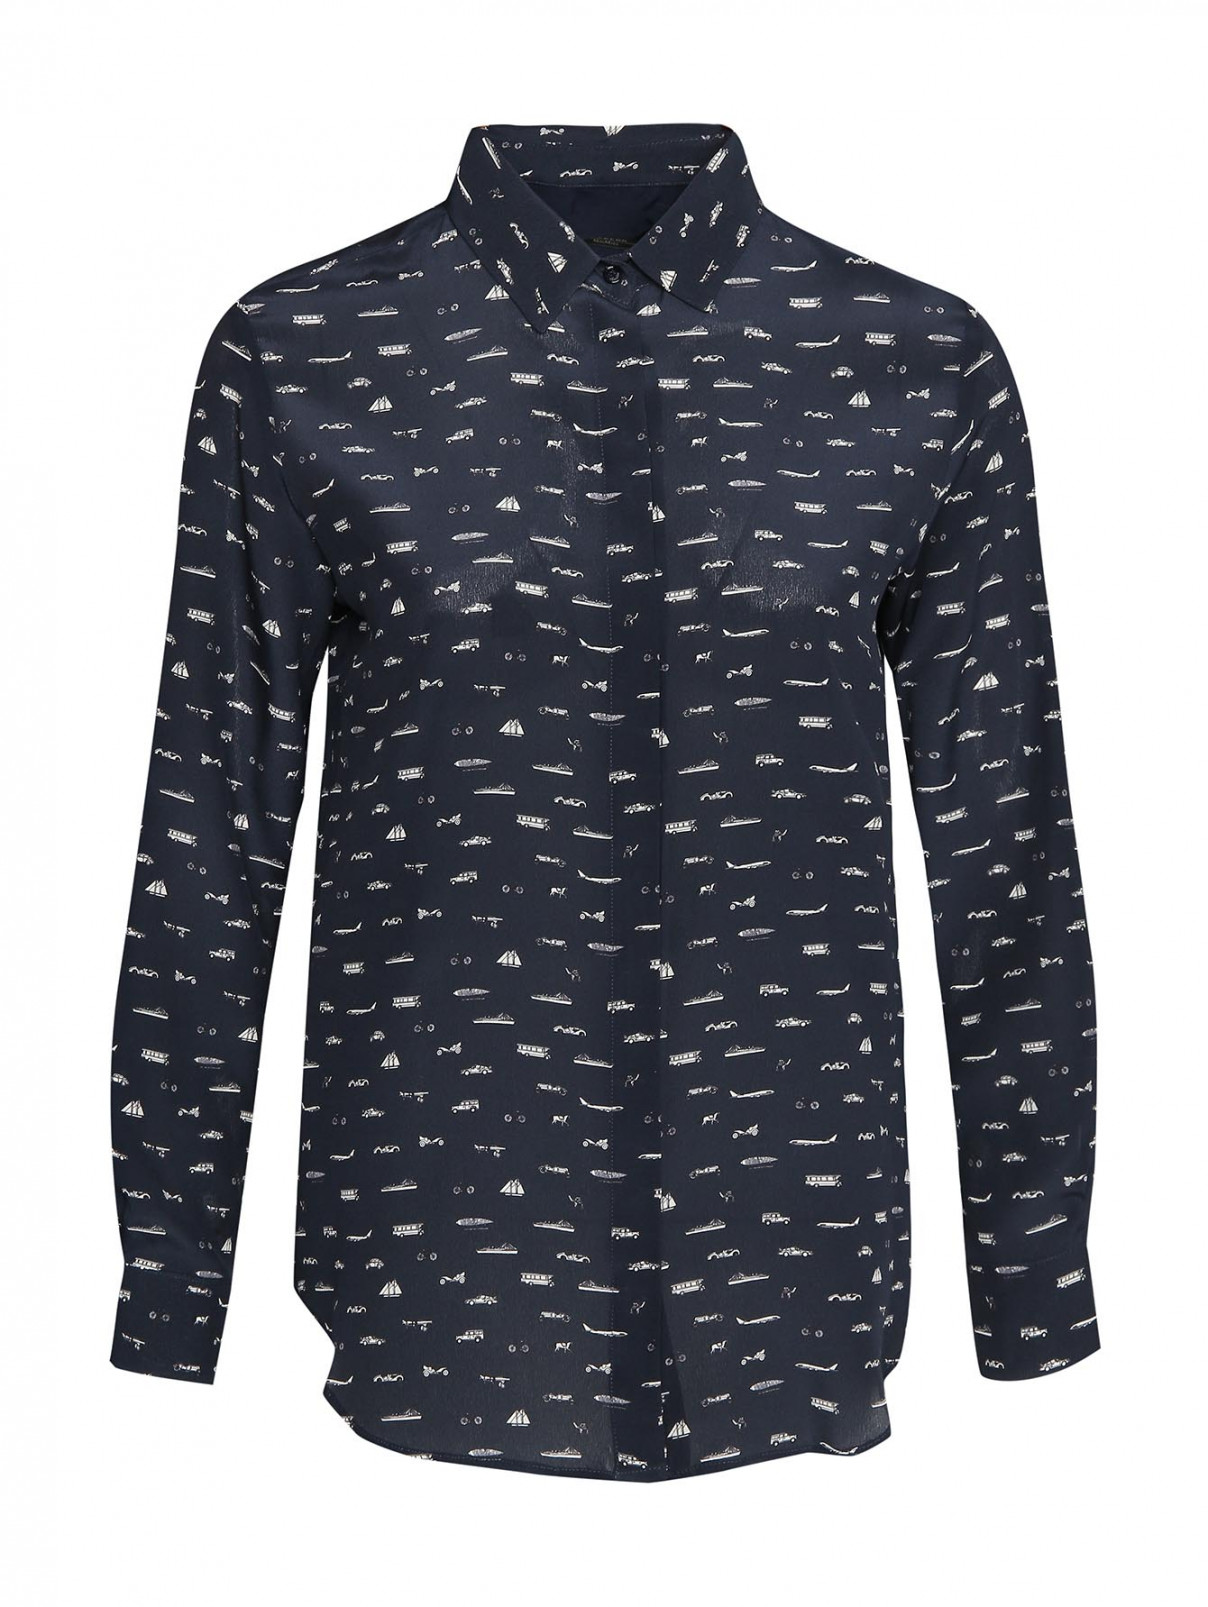 Блуза шелковая с узором Weekend Max Mara  –  Общий вид  – Цвет:  Синий